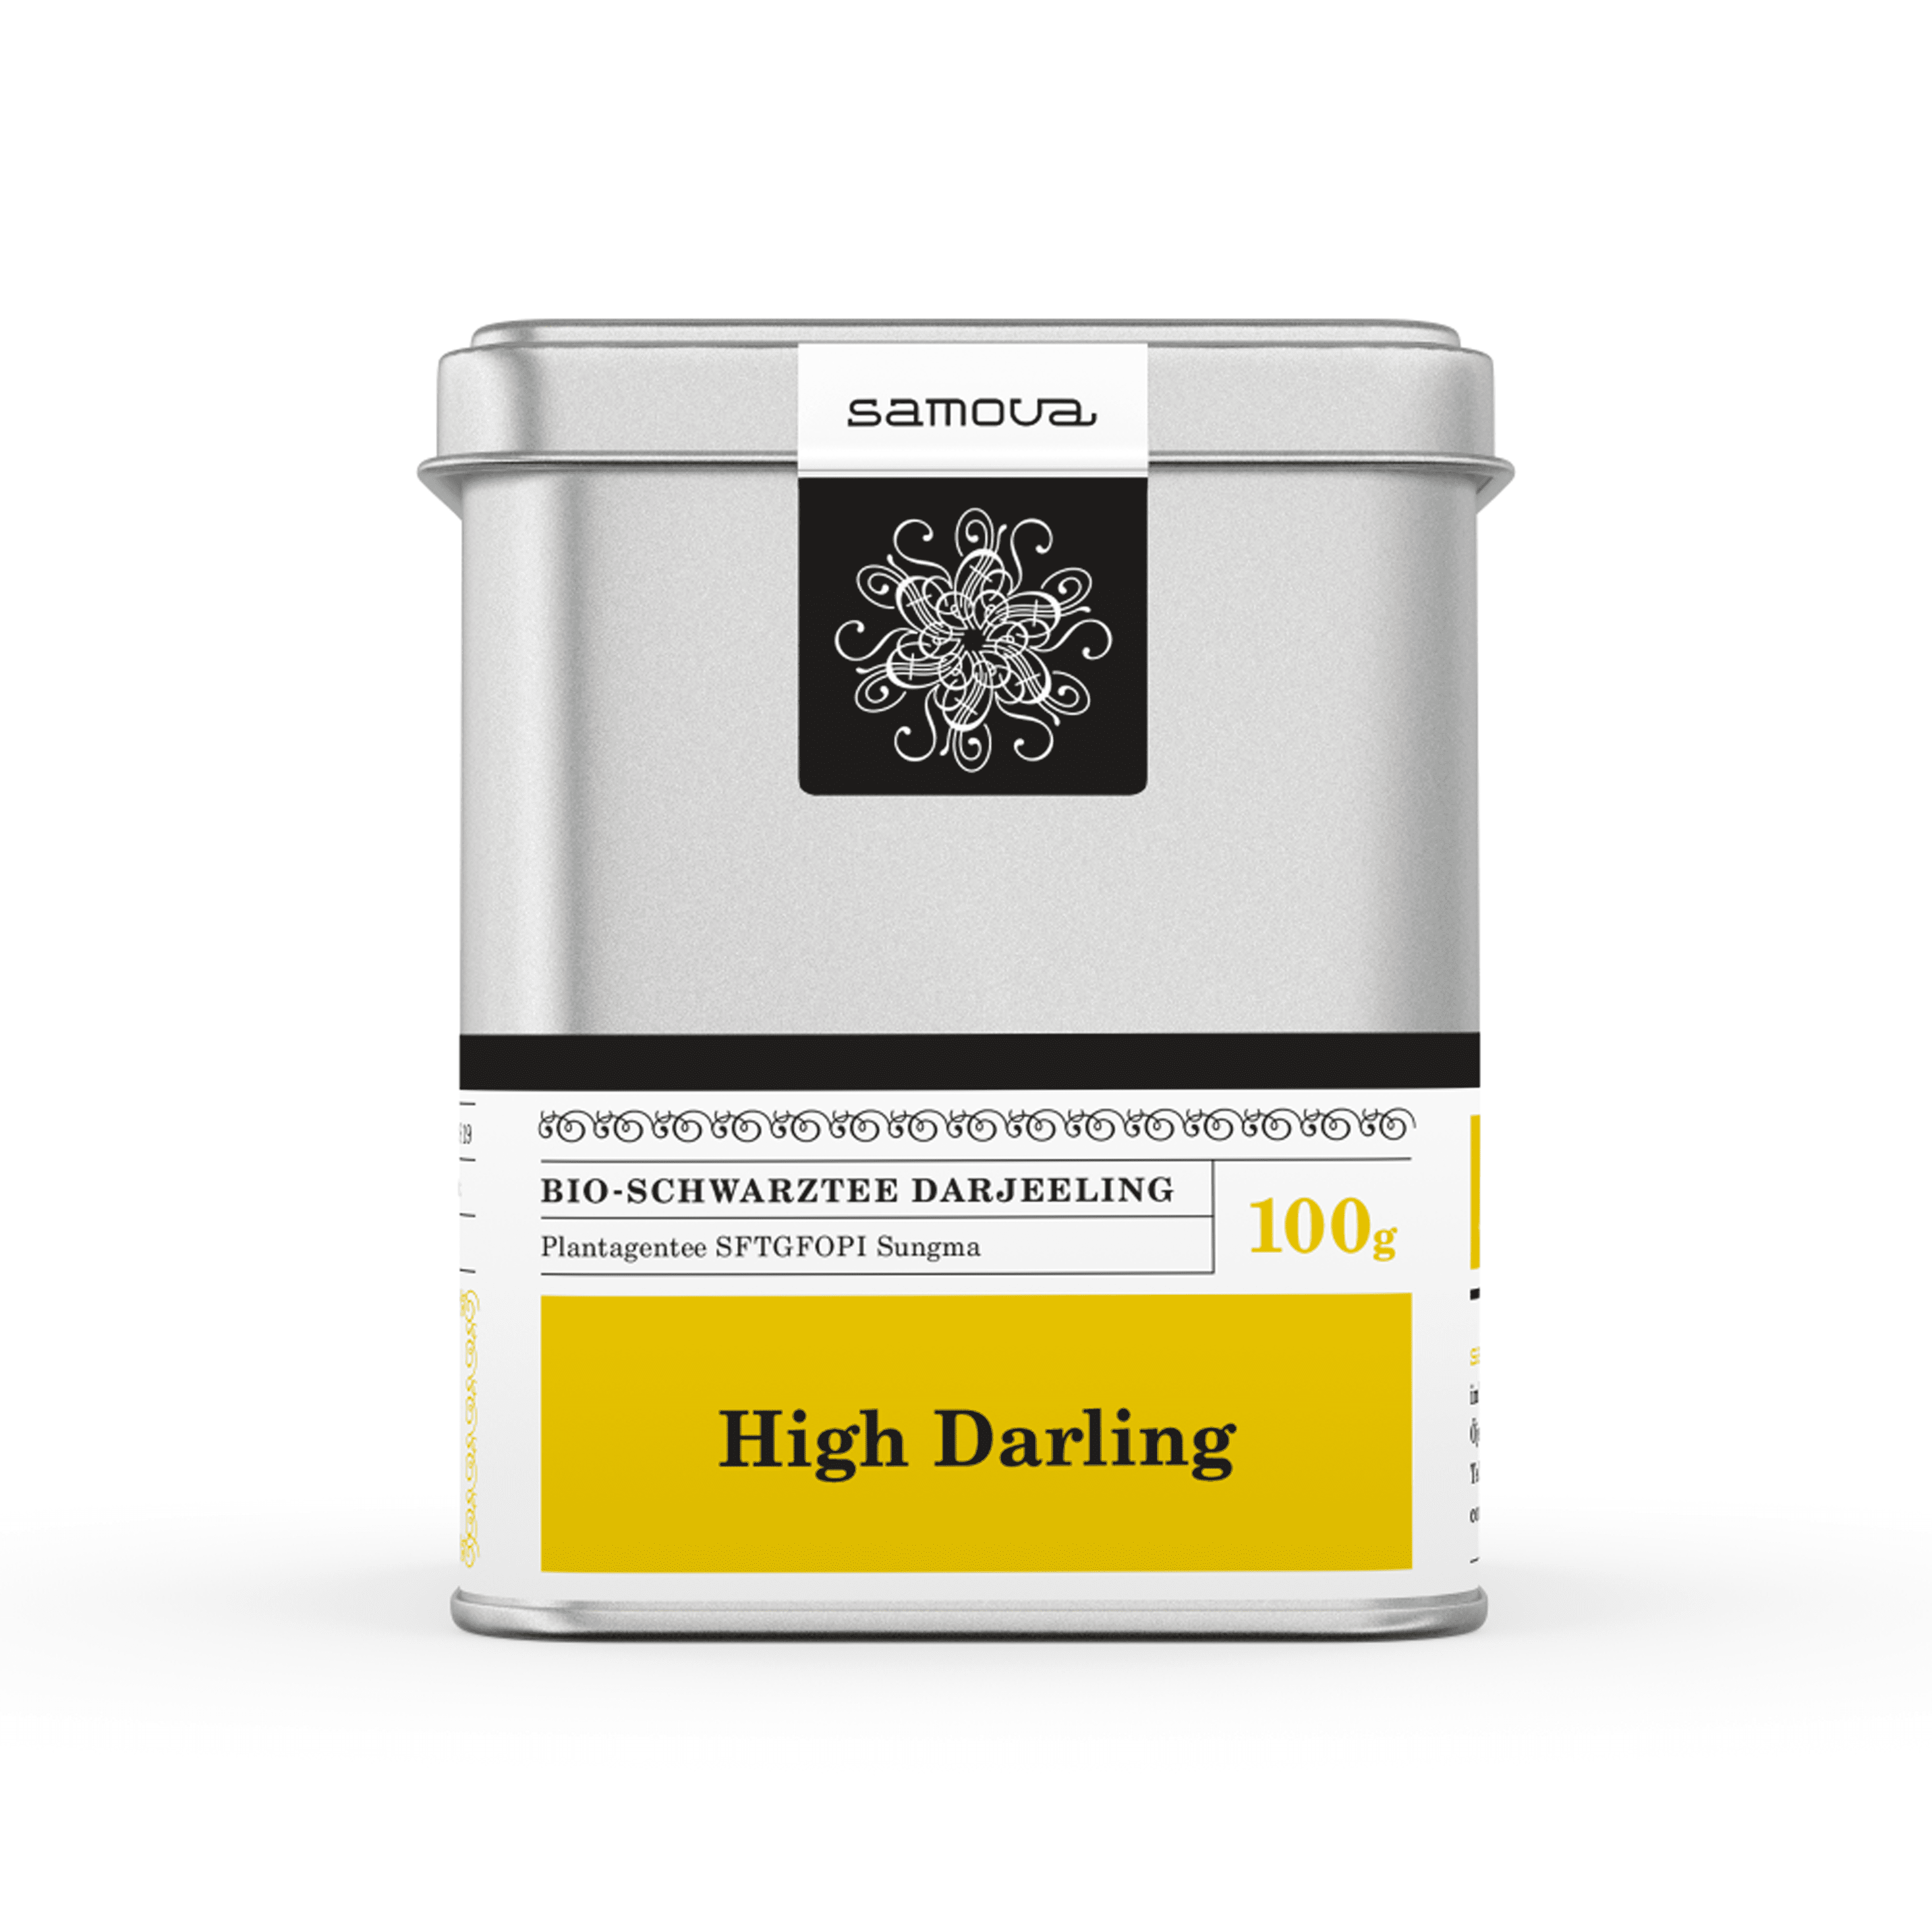 Can of high darling tea